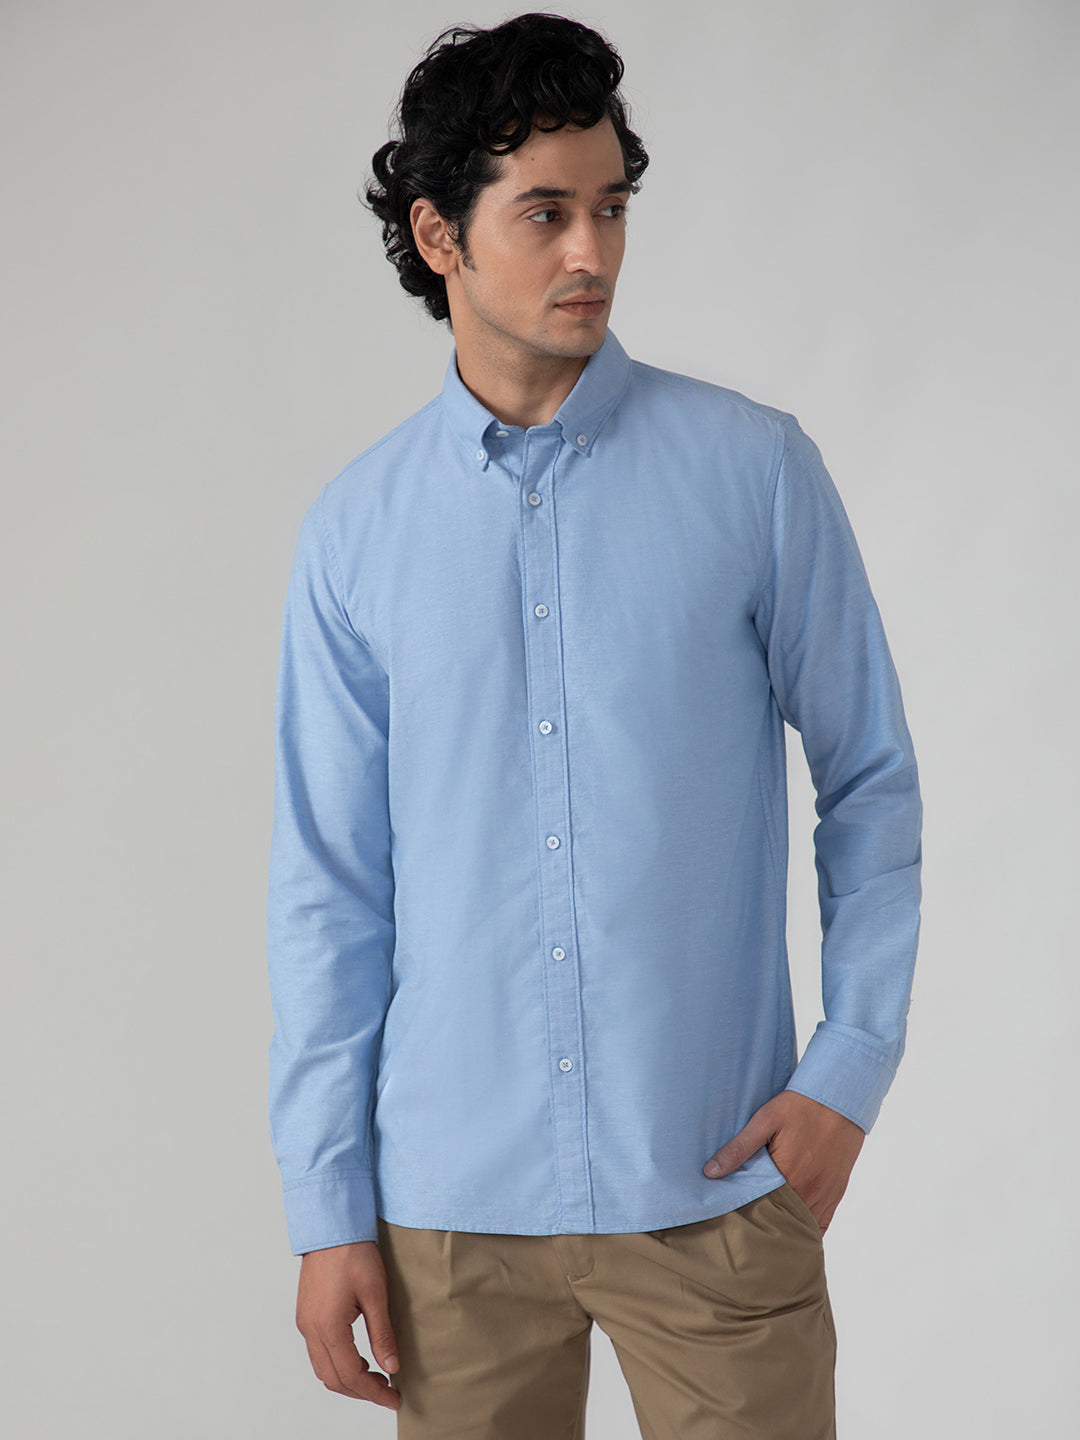 Yarn Dyed Oxford Shirt in Sky Blue-Slim Fit